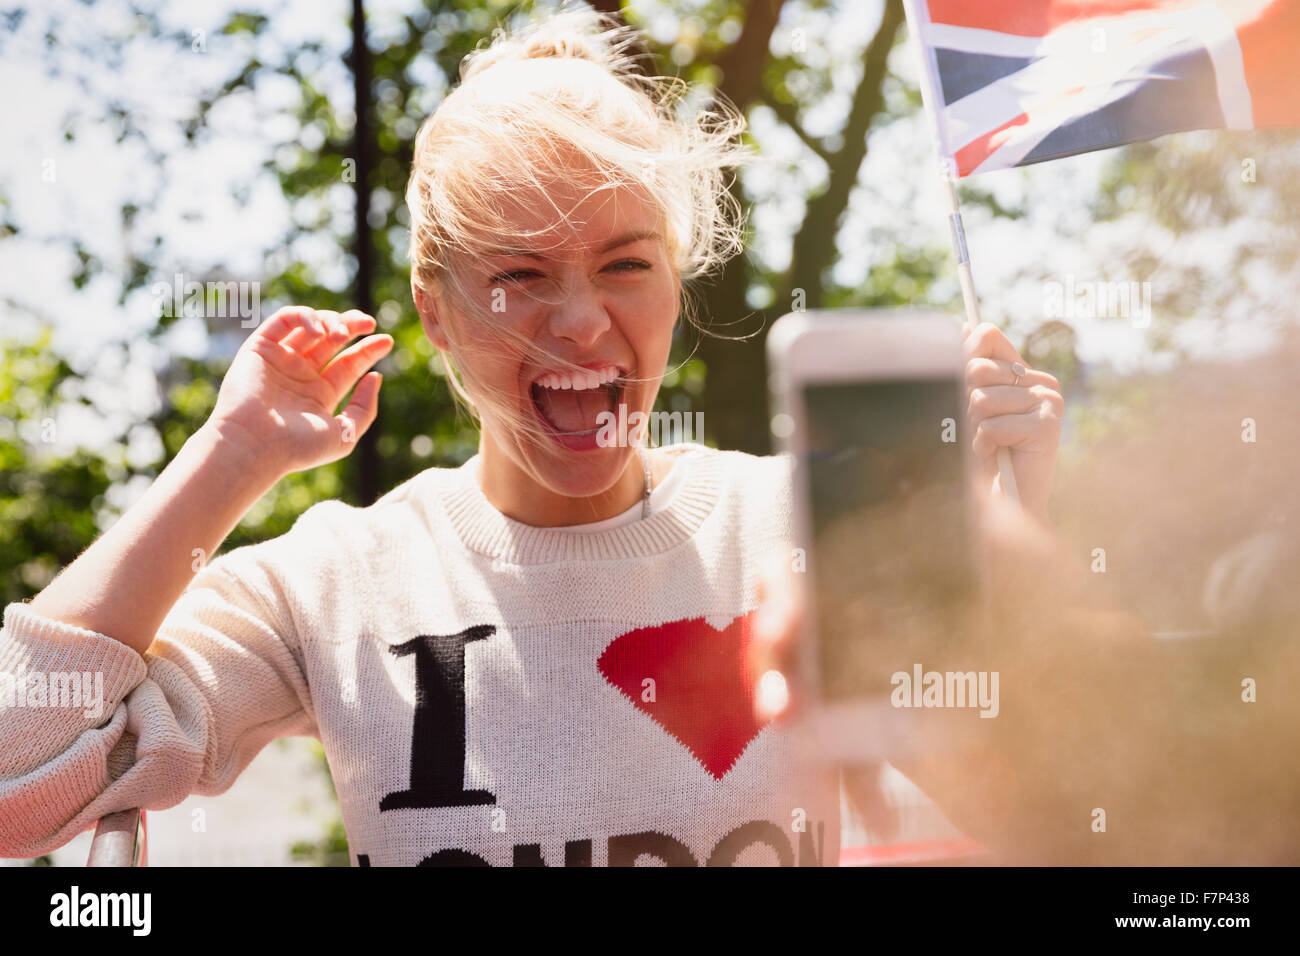 Donna entusiasta sventola bandiera britannica fotografato Foto Stock